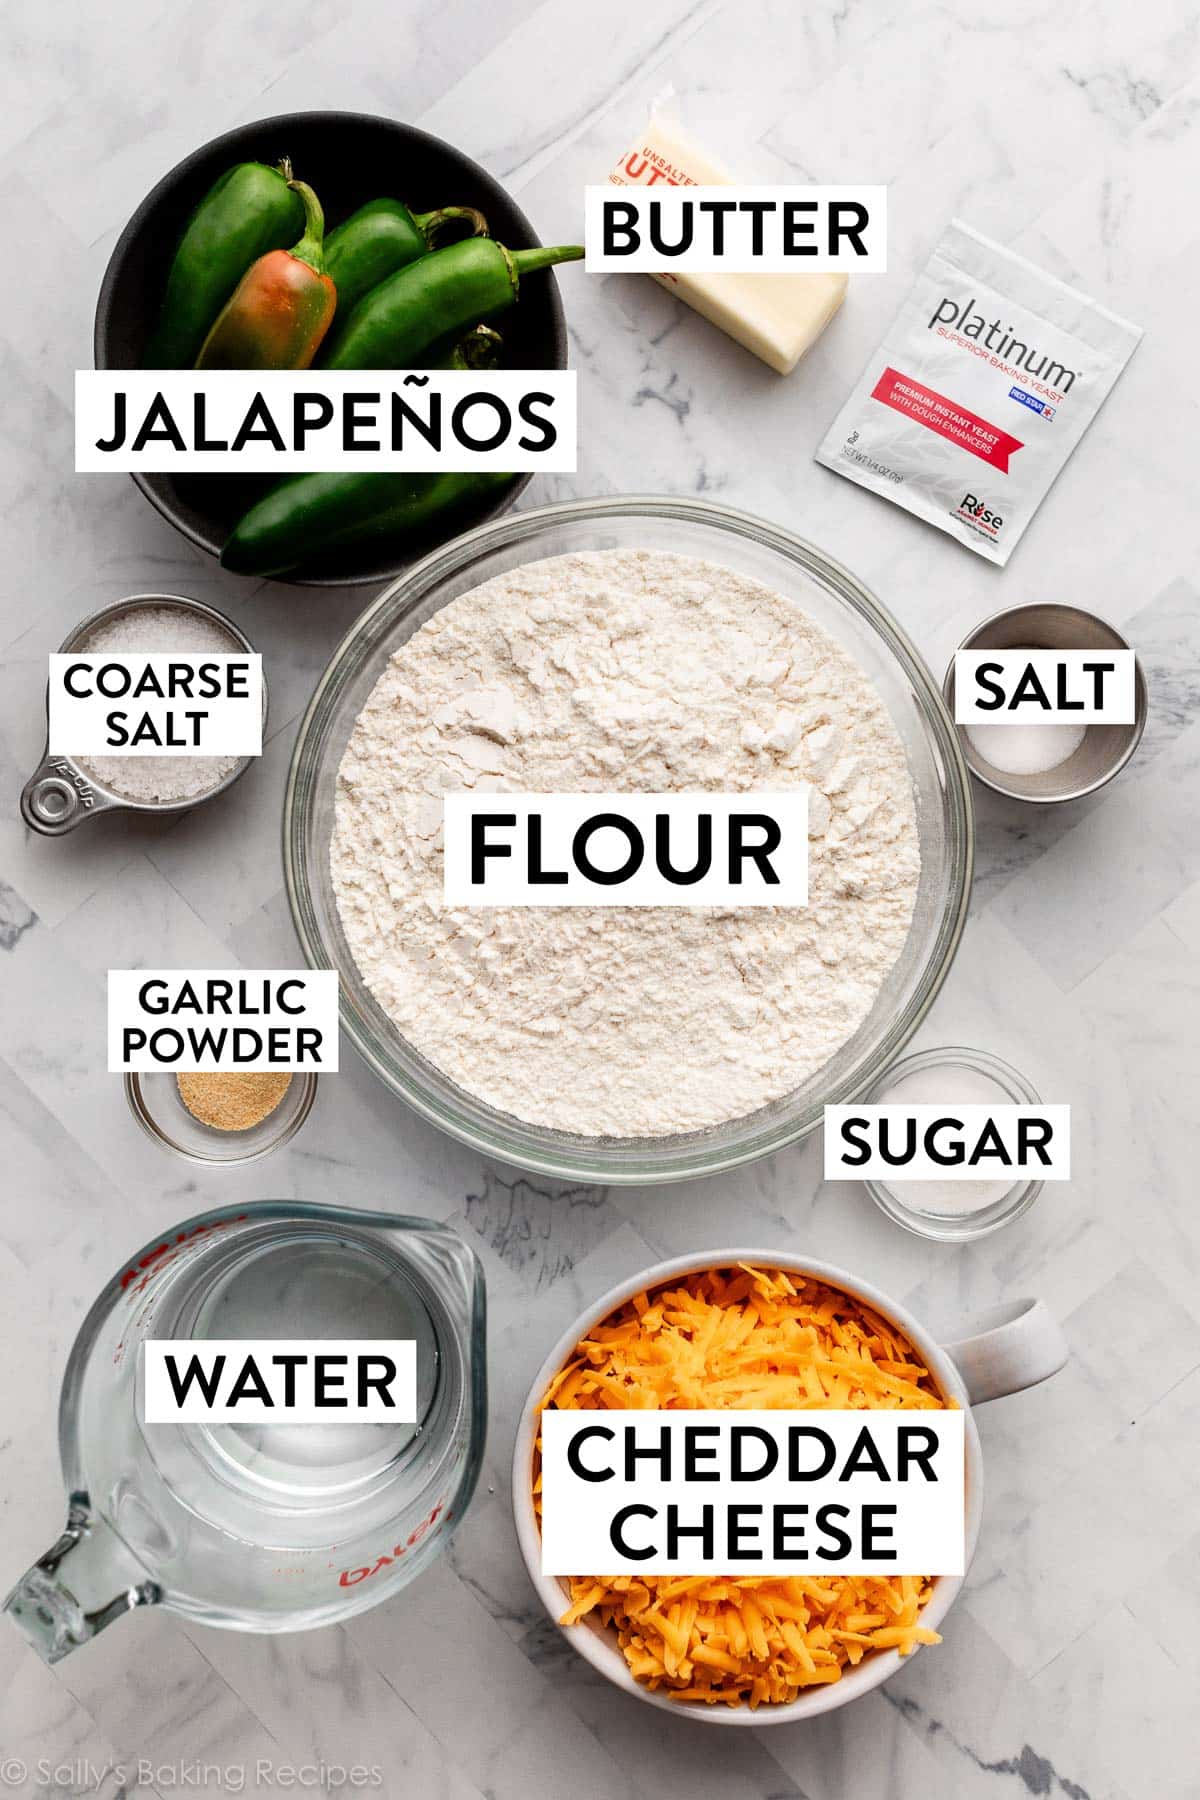 ingredients in bowls including jalapeños, flour, garlic powder, cheddar cheese, sugar, and salt.